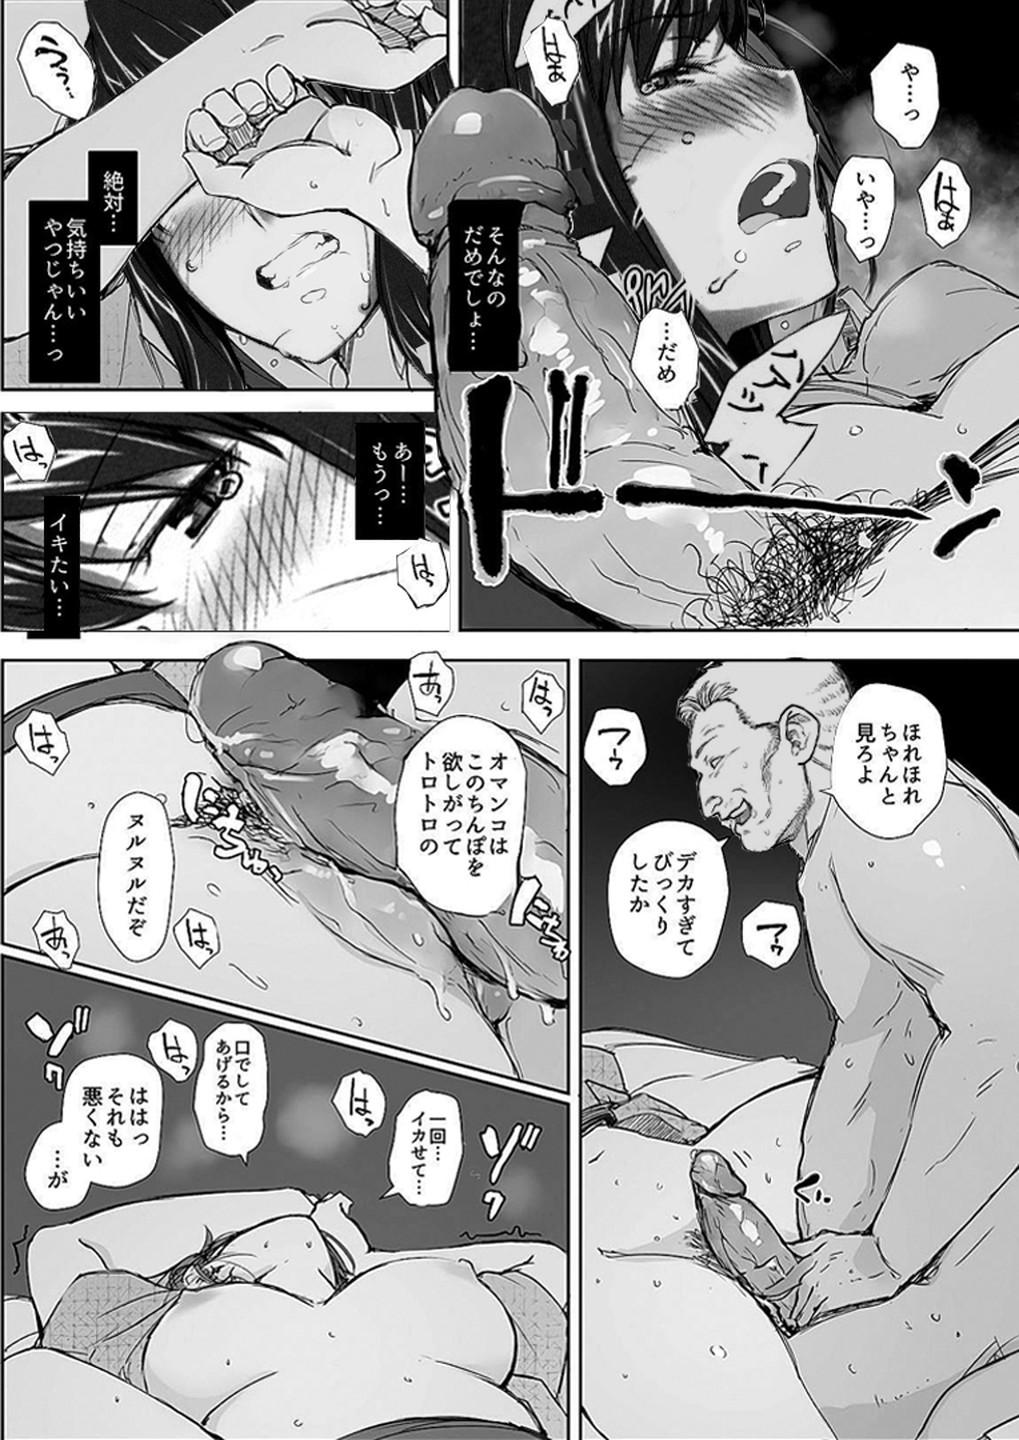 Sakiko-san in delusion Vol.1 Ver.1.1 ~Sakiko-san's circumstance at an educational training~ Stupid Sakiko (collage) on-going 139